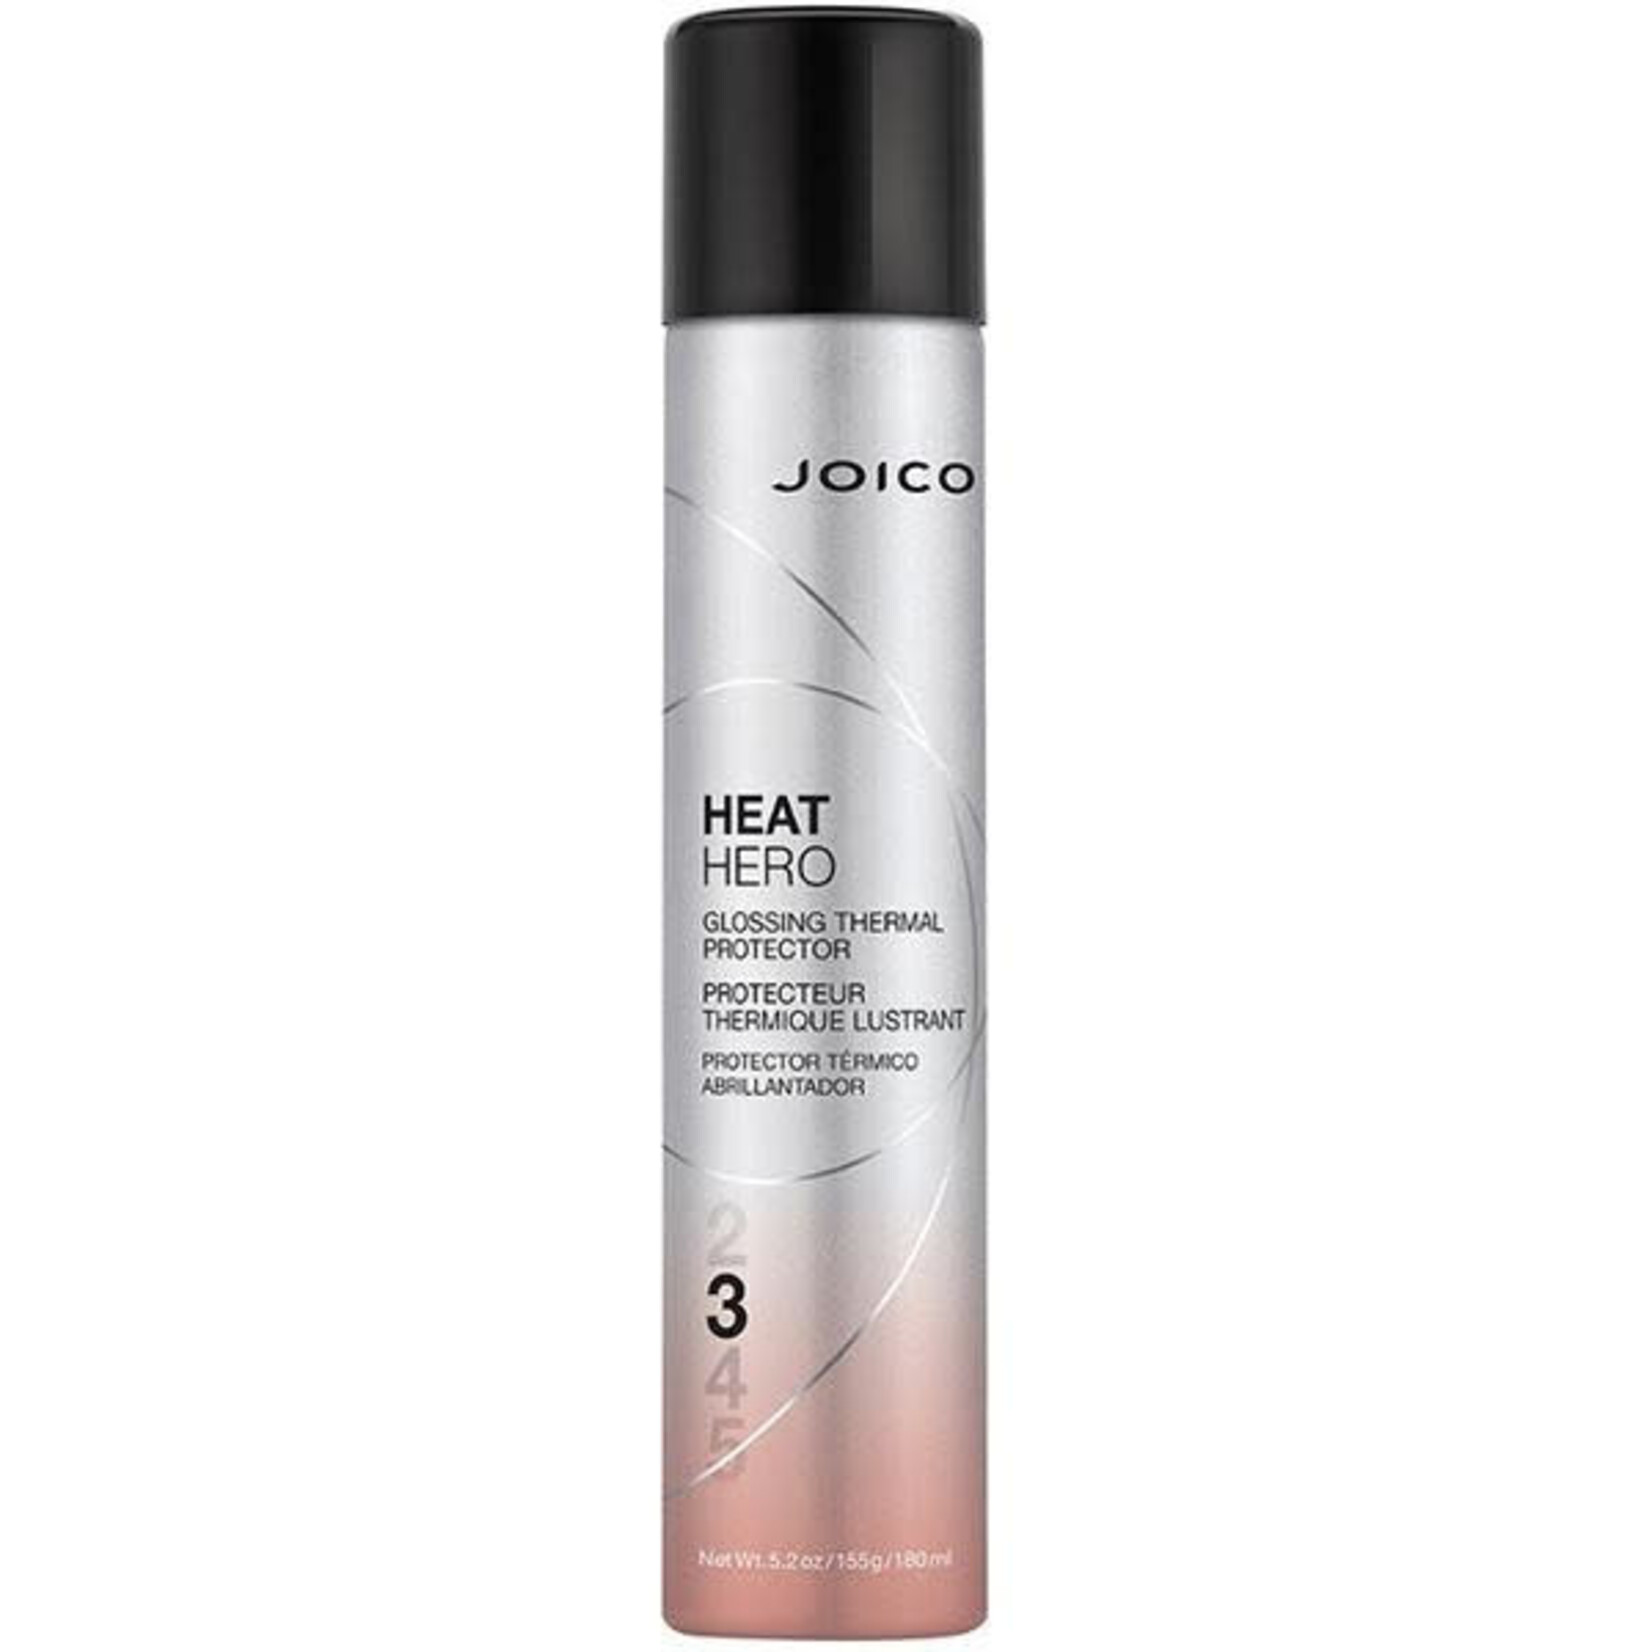 Joico Joico - Heat Hero - Protecteur Thermique Lustrant 180ml